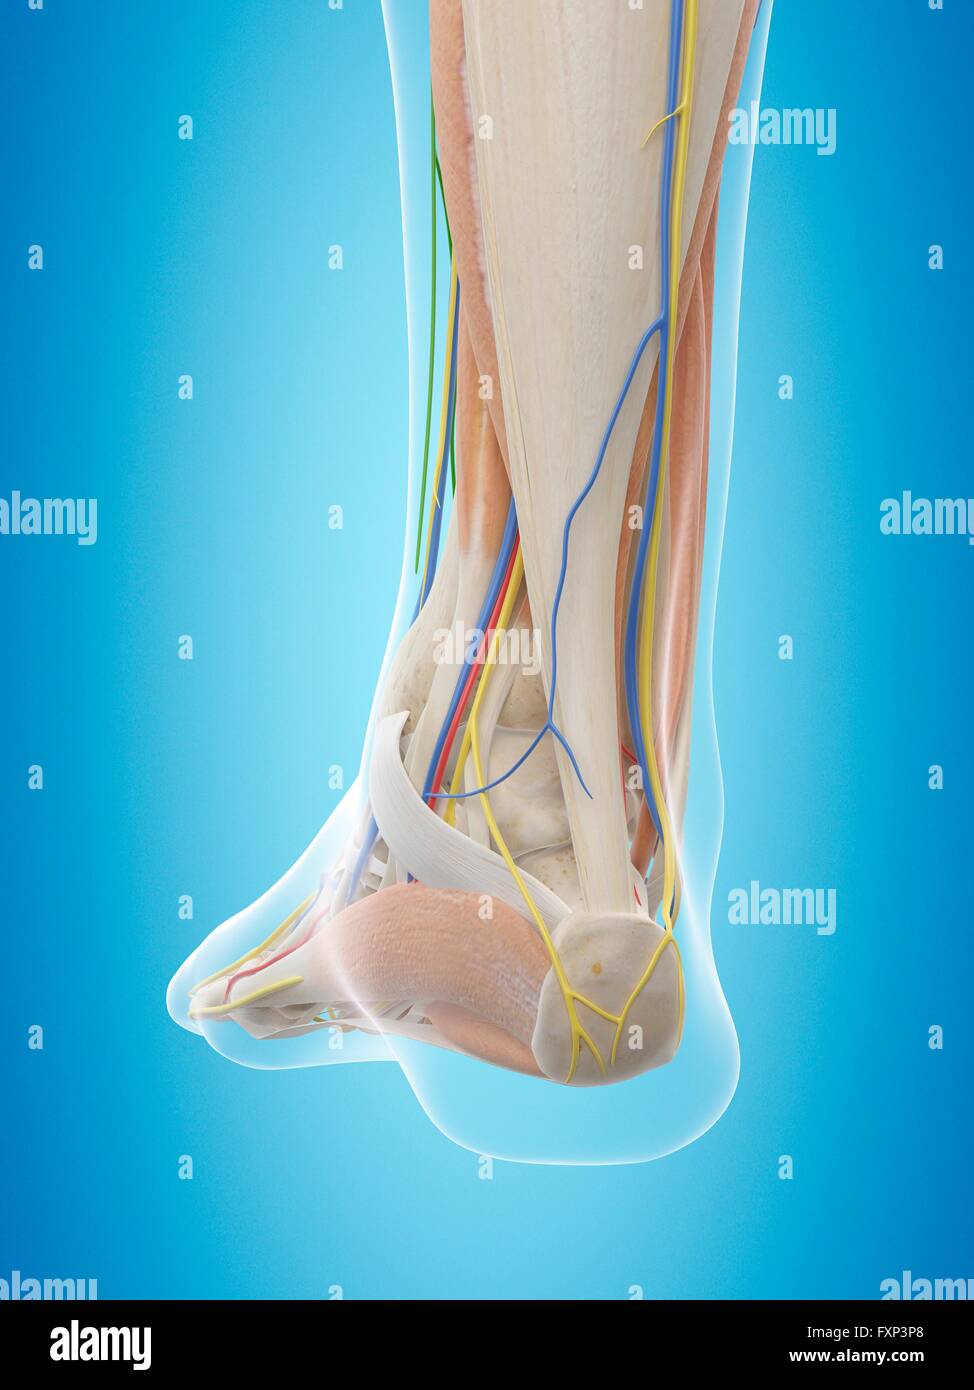 Human foot anatomy, computer illustration. Stock Photo